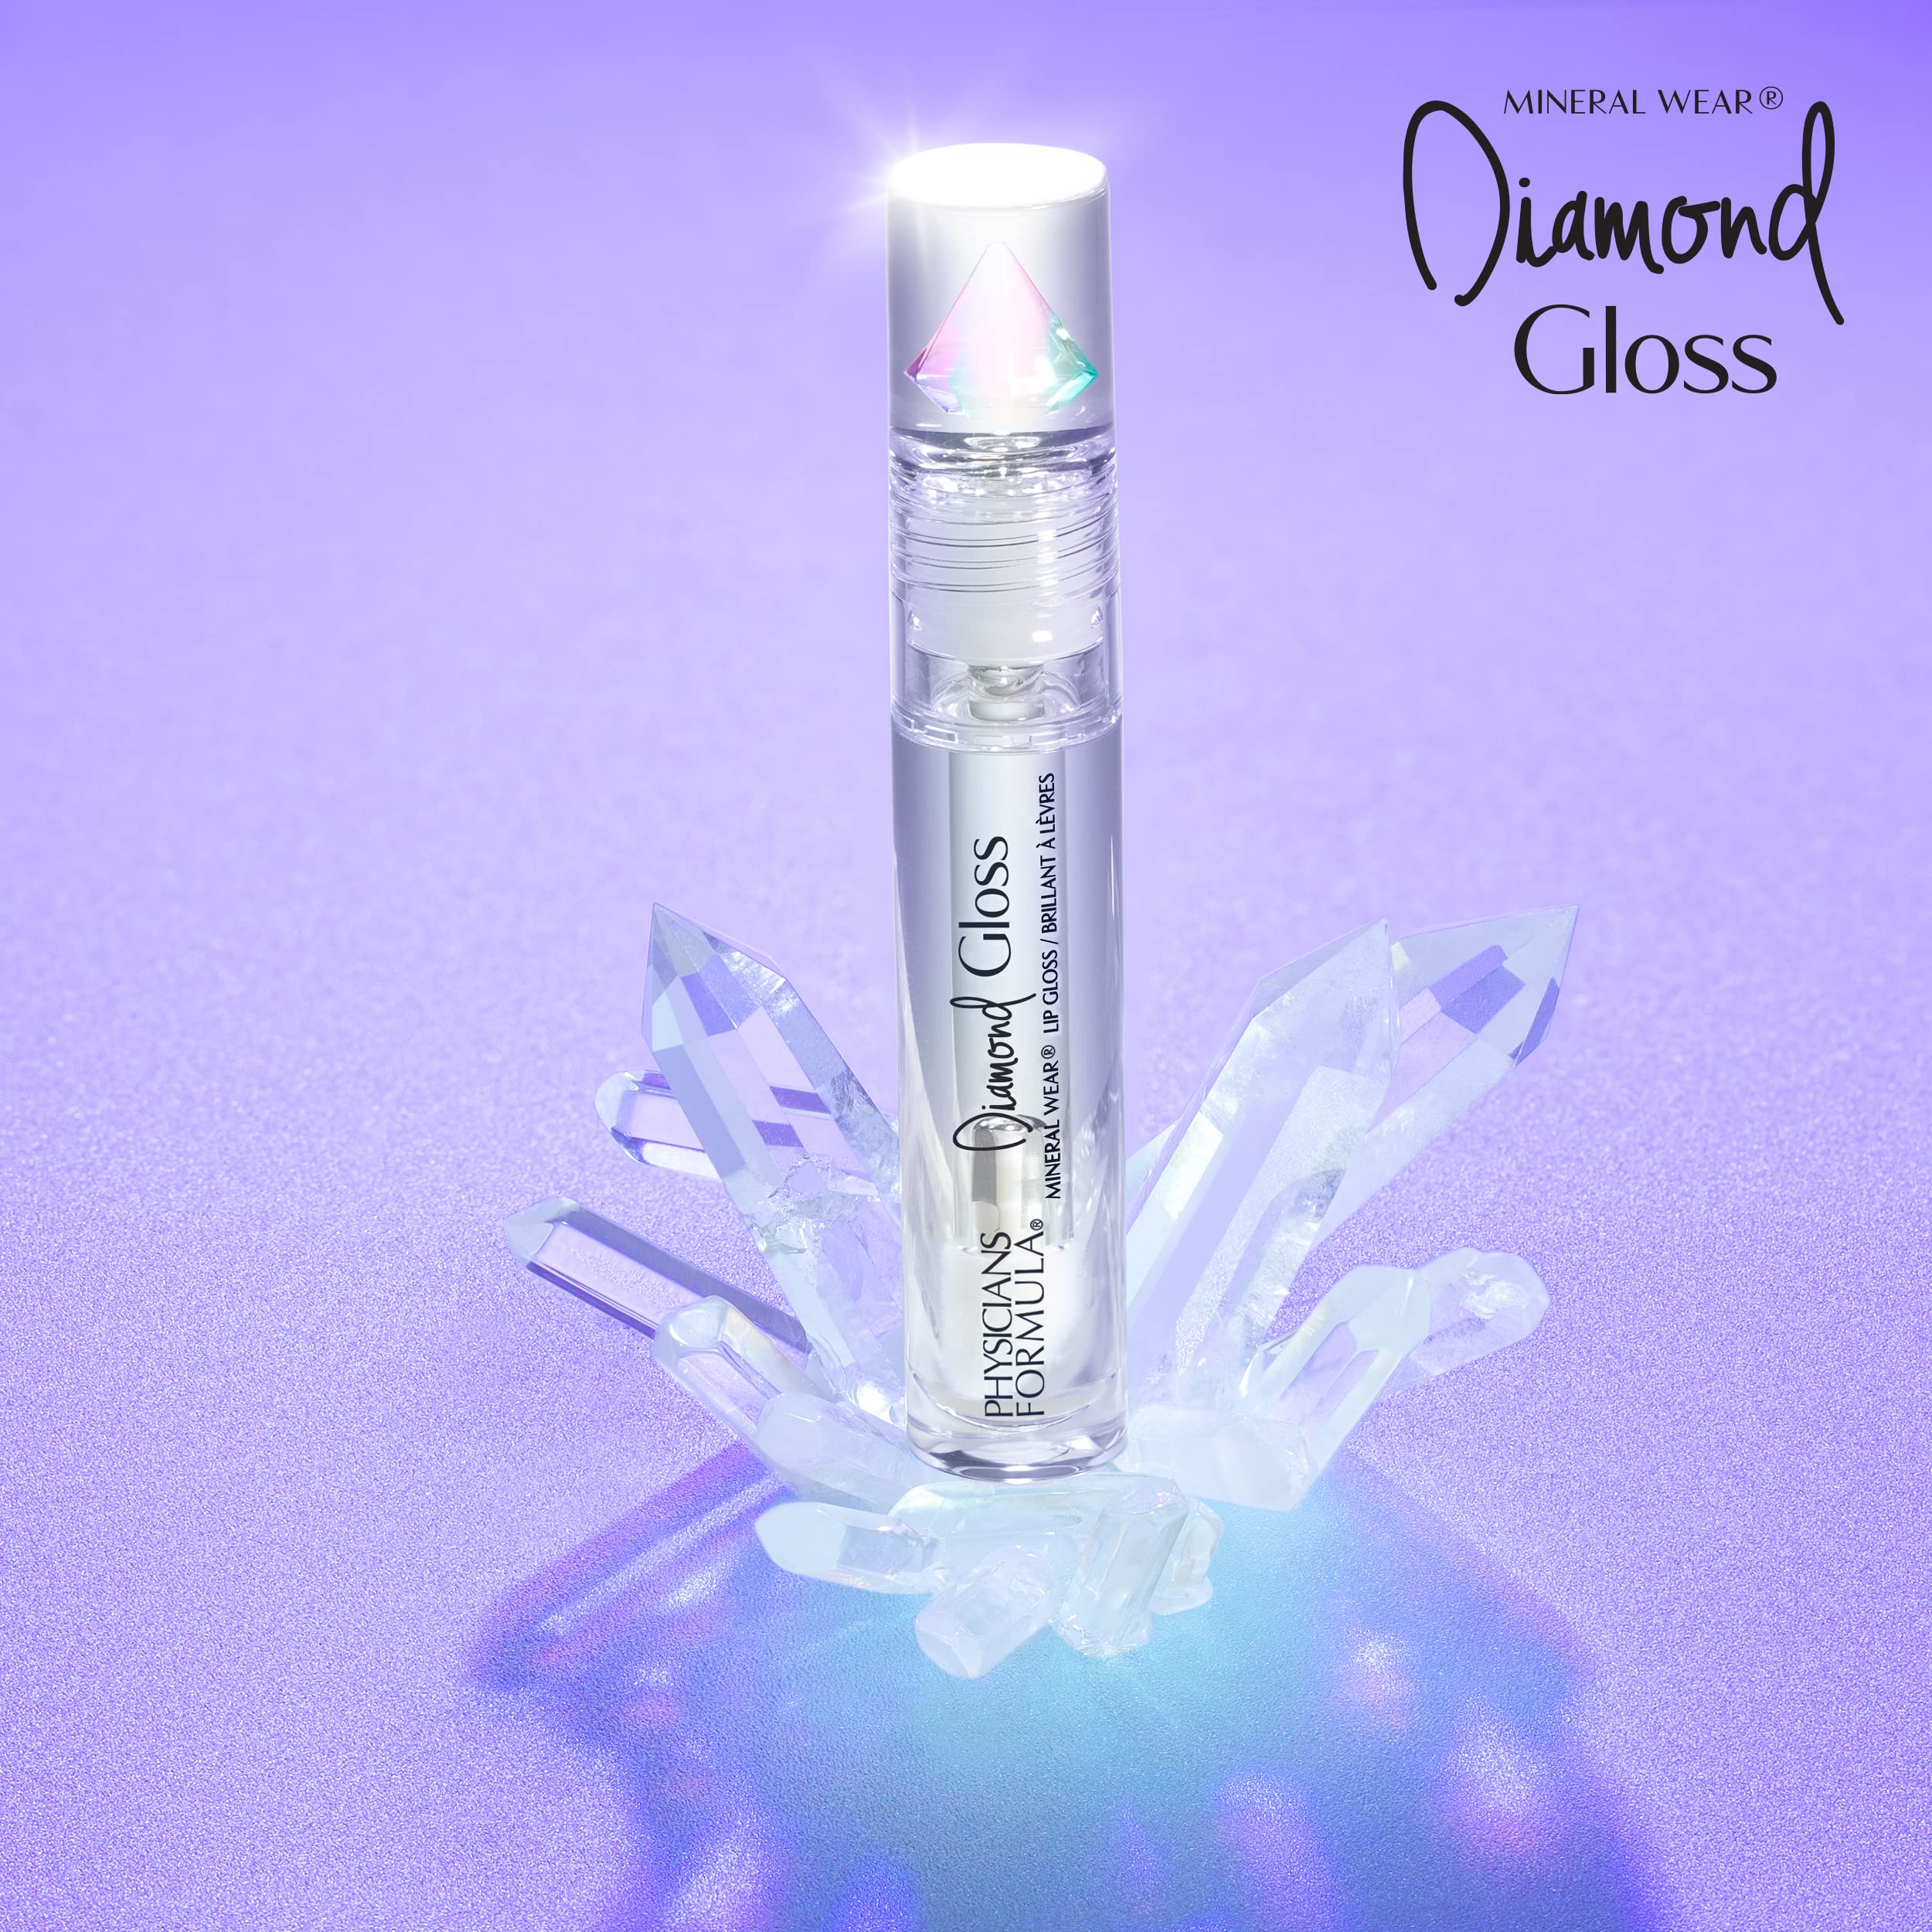 Physicians Formula Mineral Wear® Diamond Gloss Crystal Clear